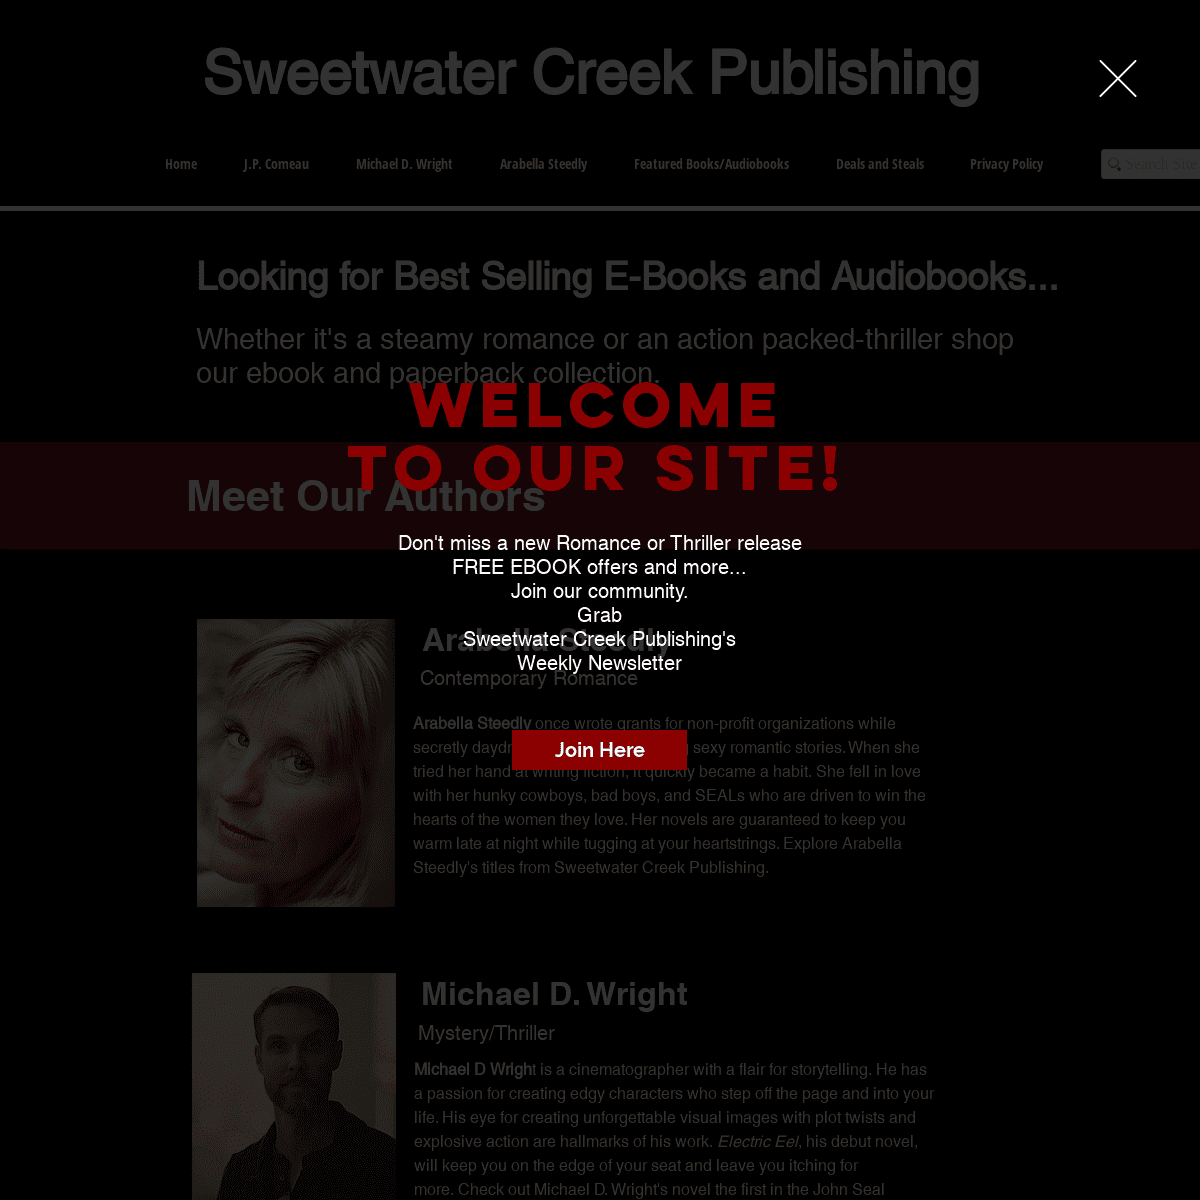 A complete backup of sweetwatercreekpublishing.com